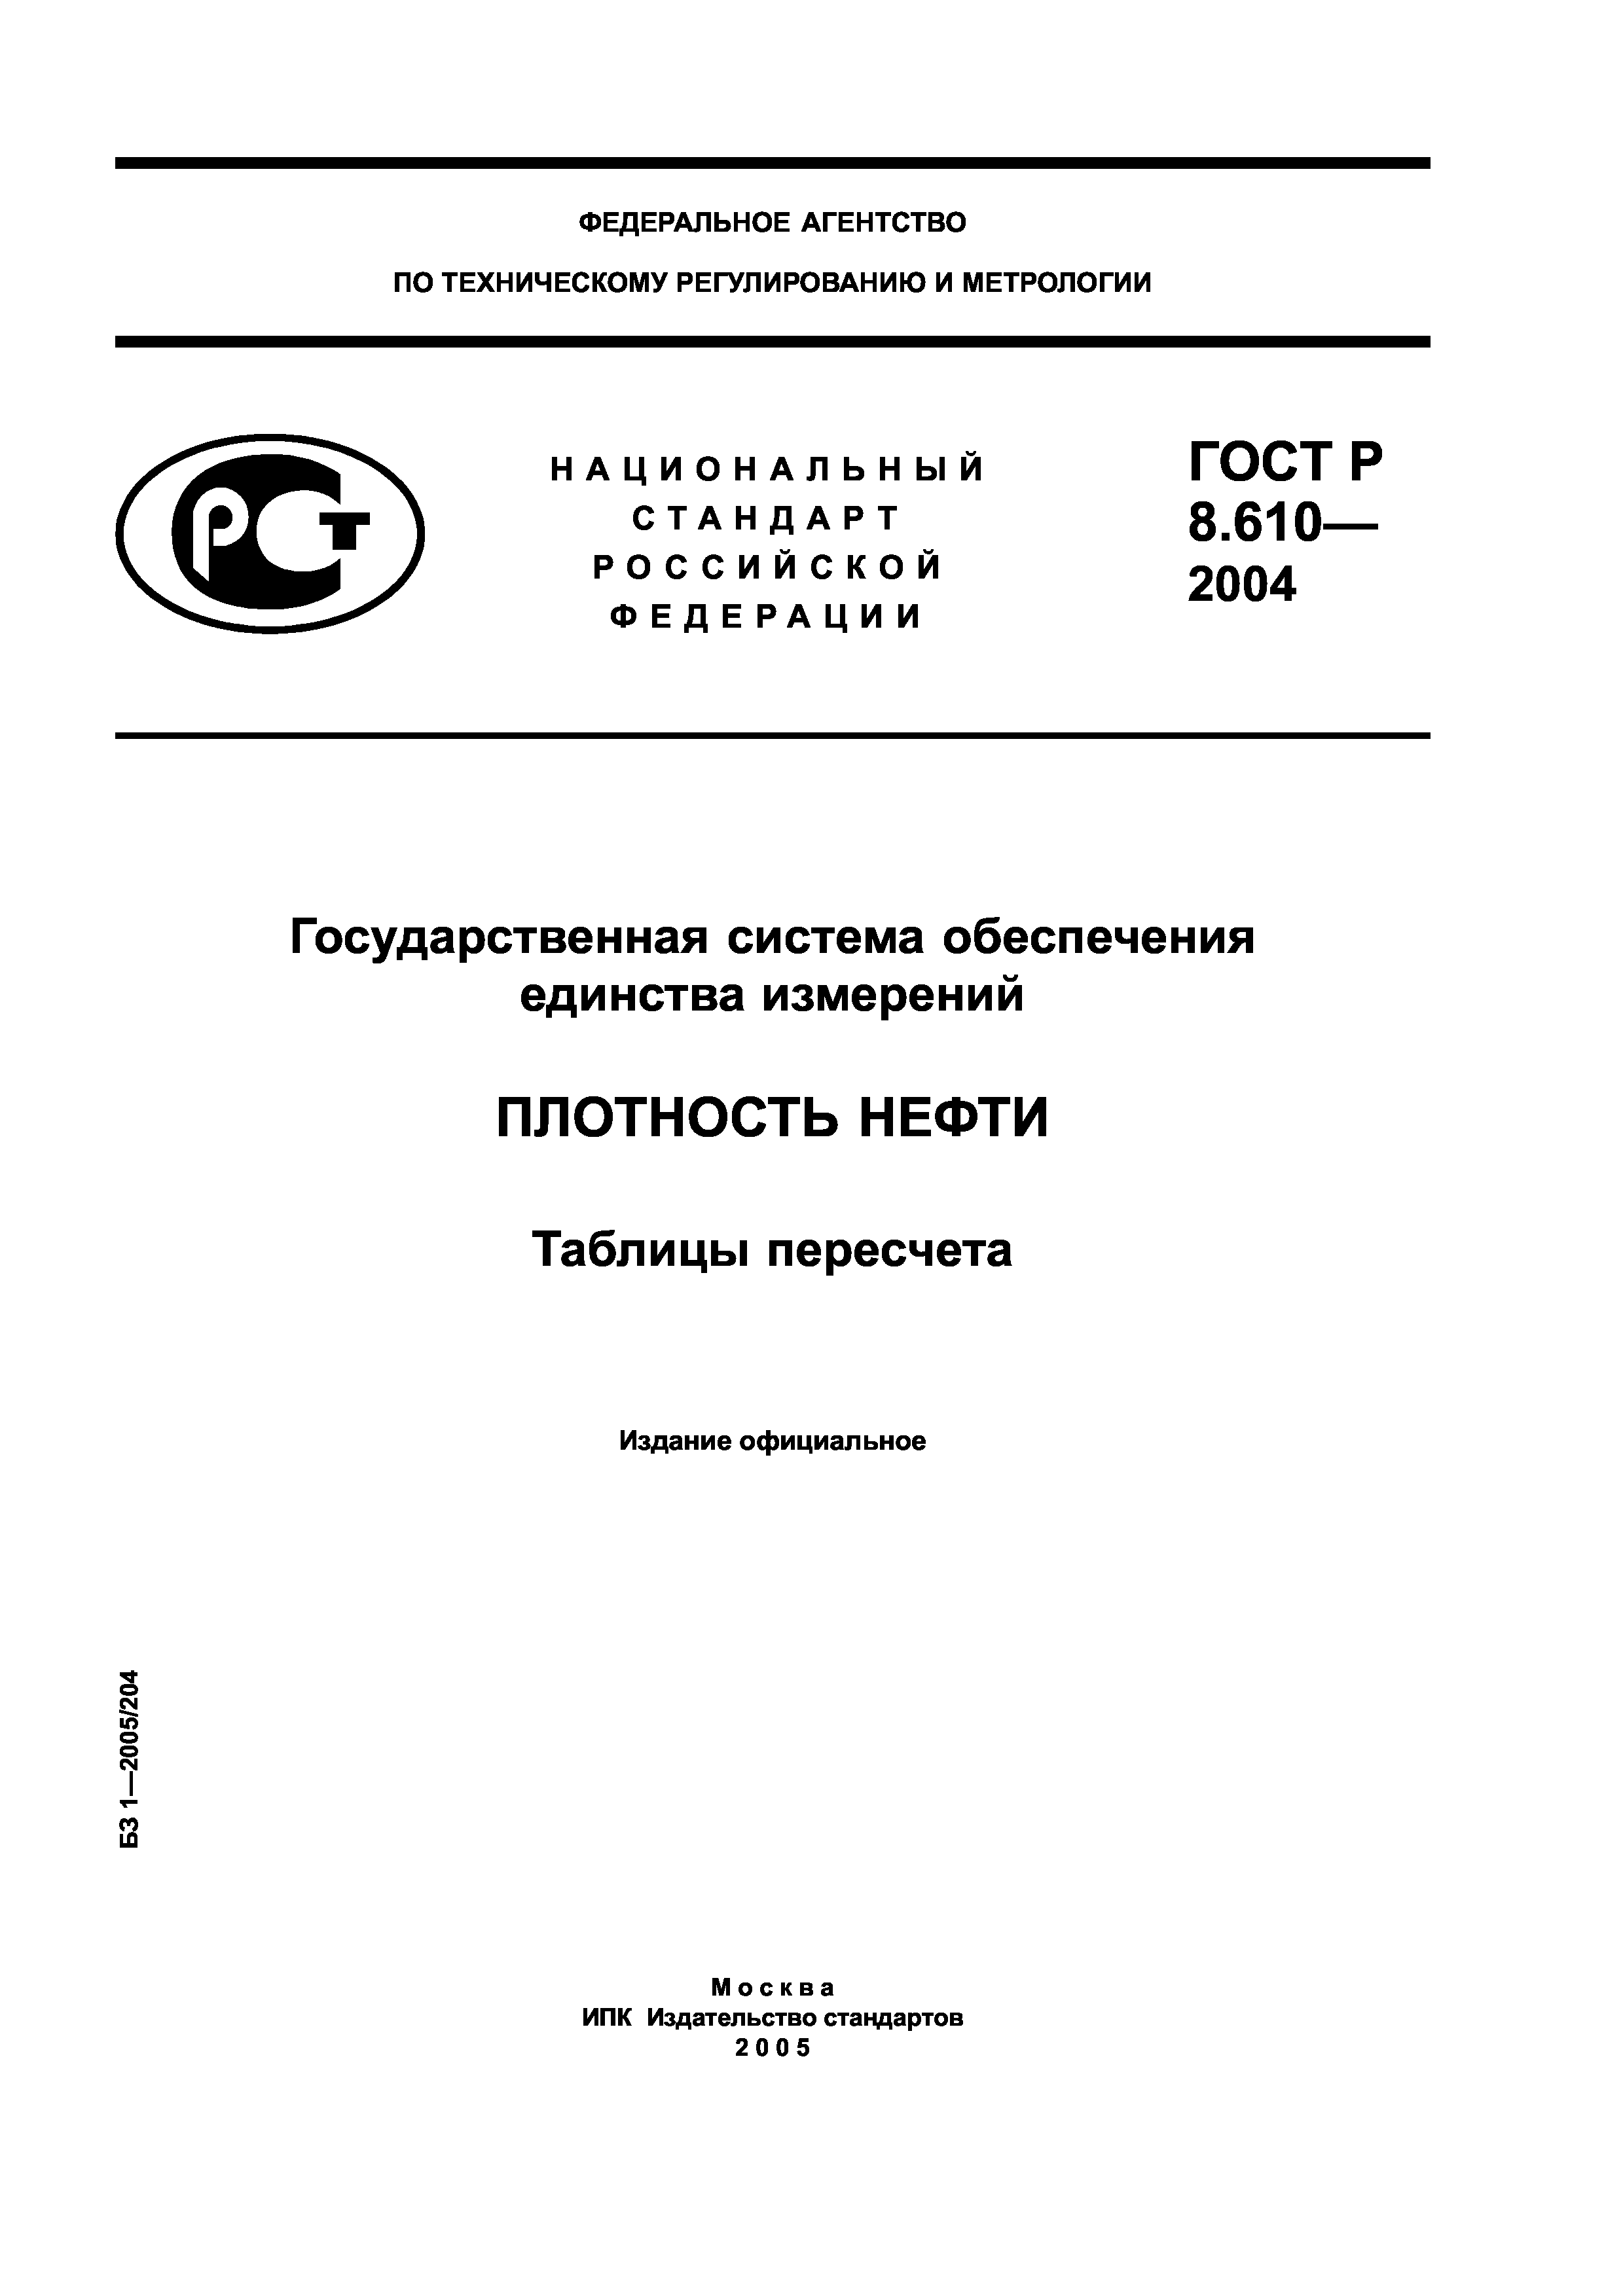 ГОСТ Р 8.610-2004